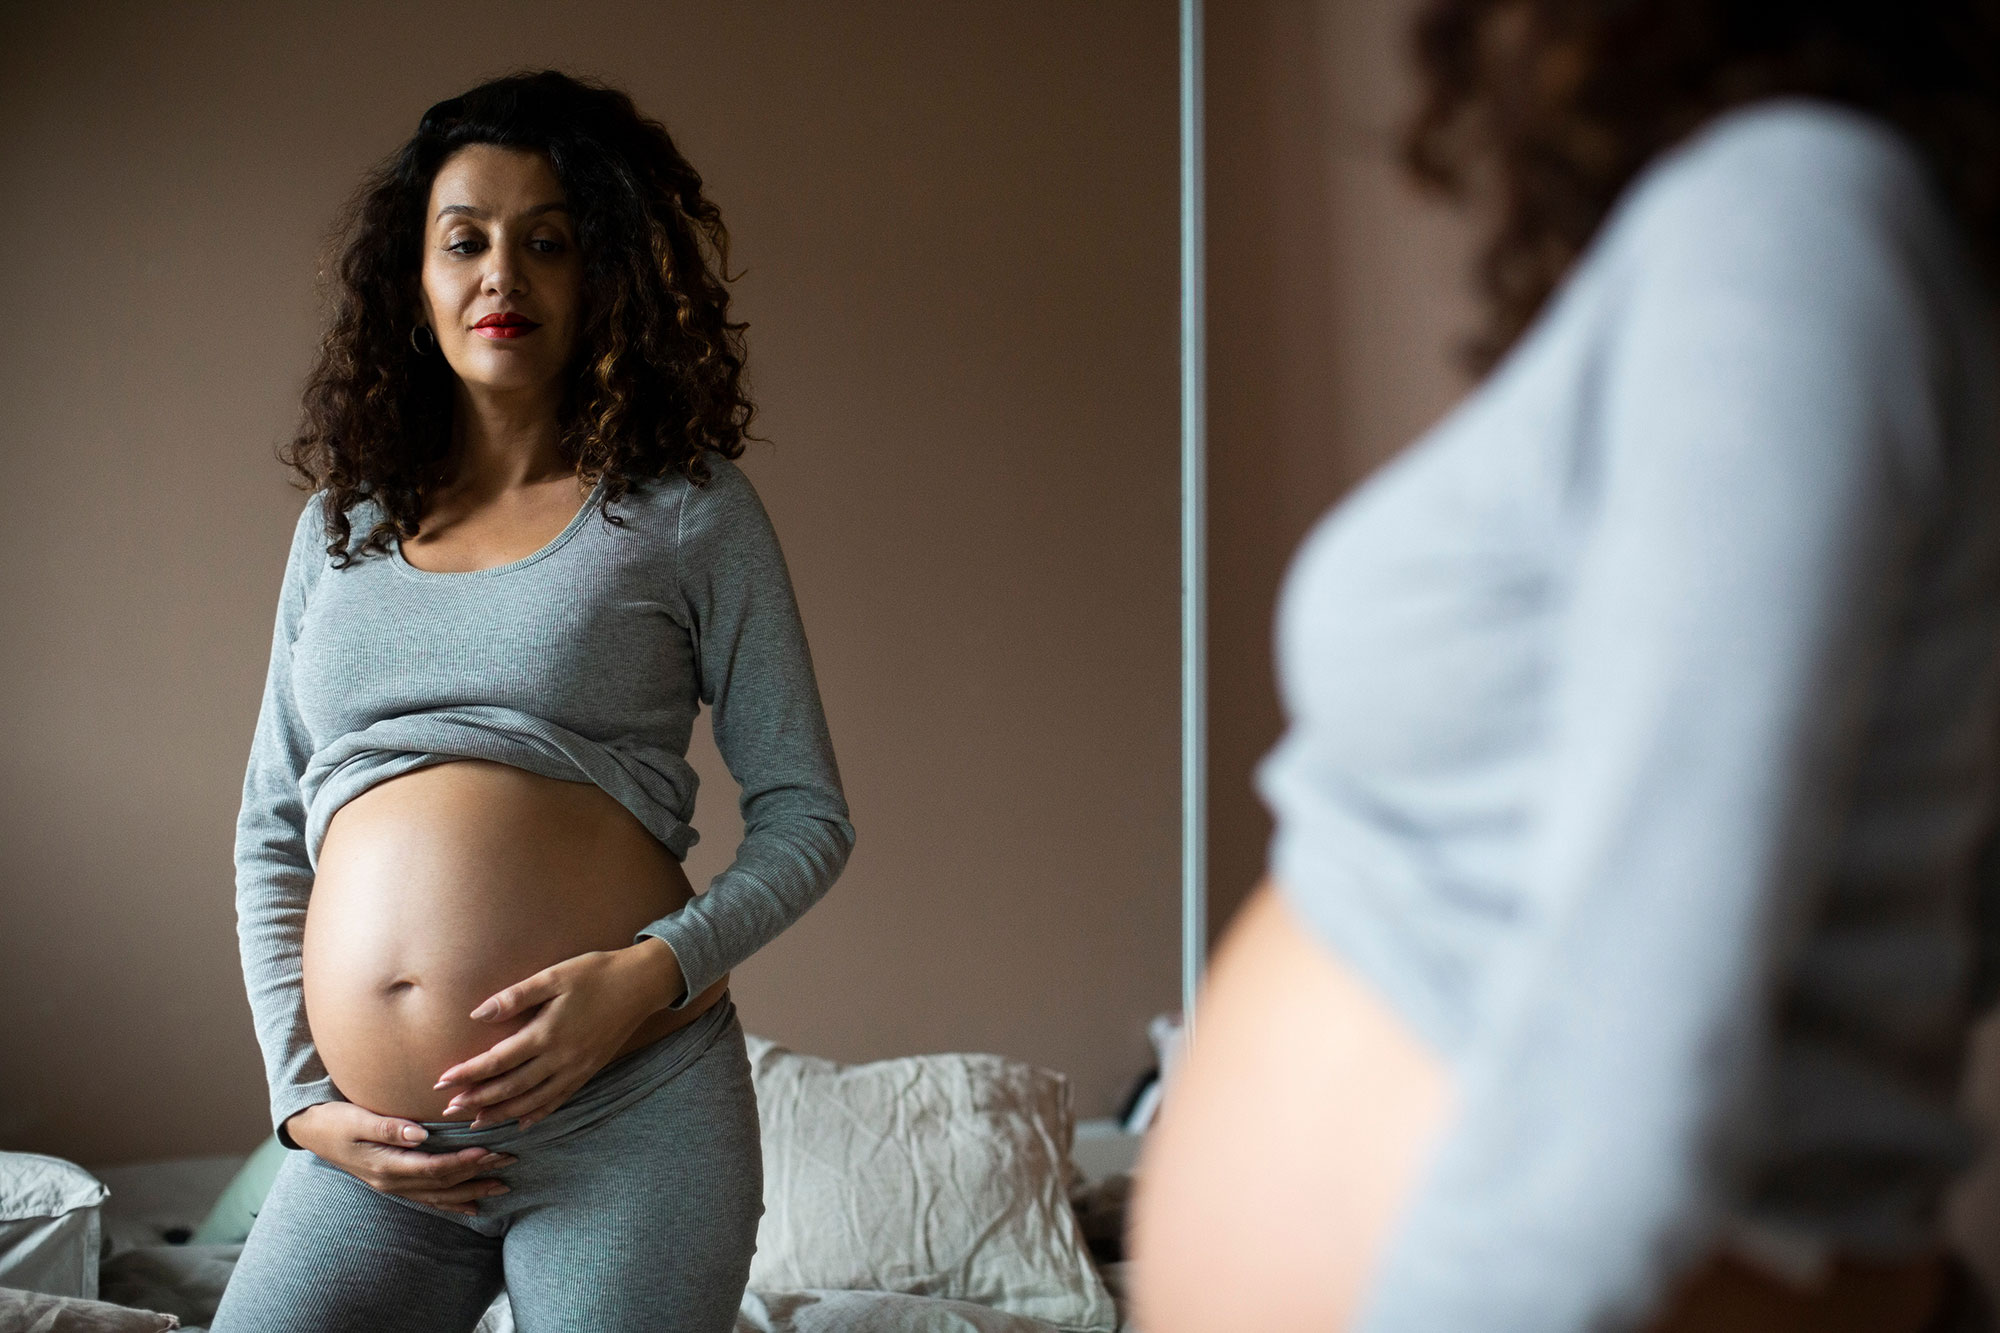 pregnant woman looking at mirror